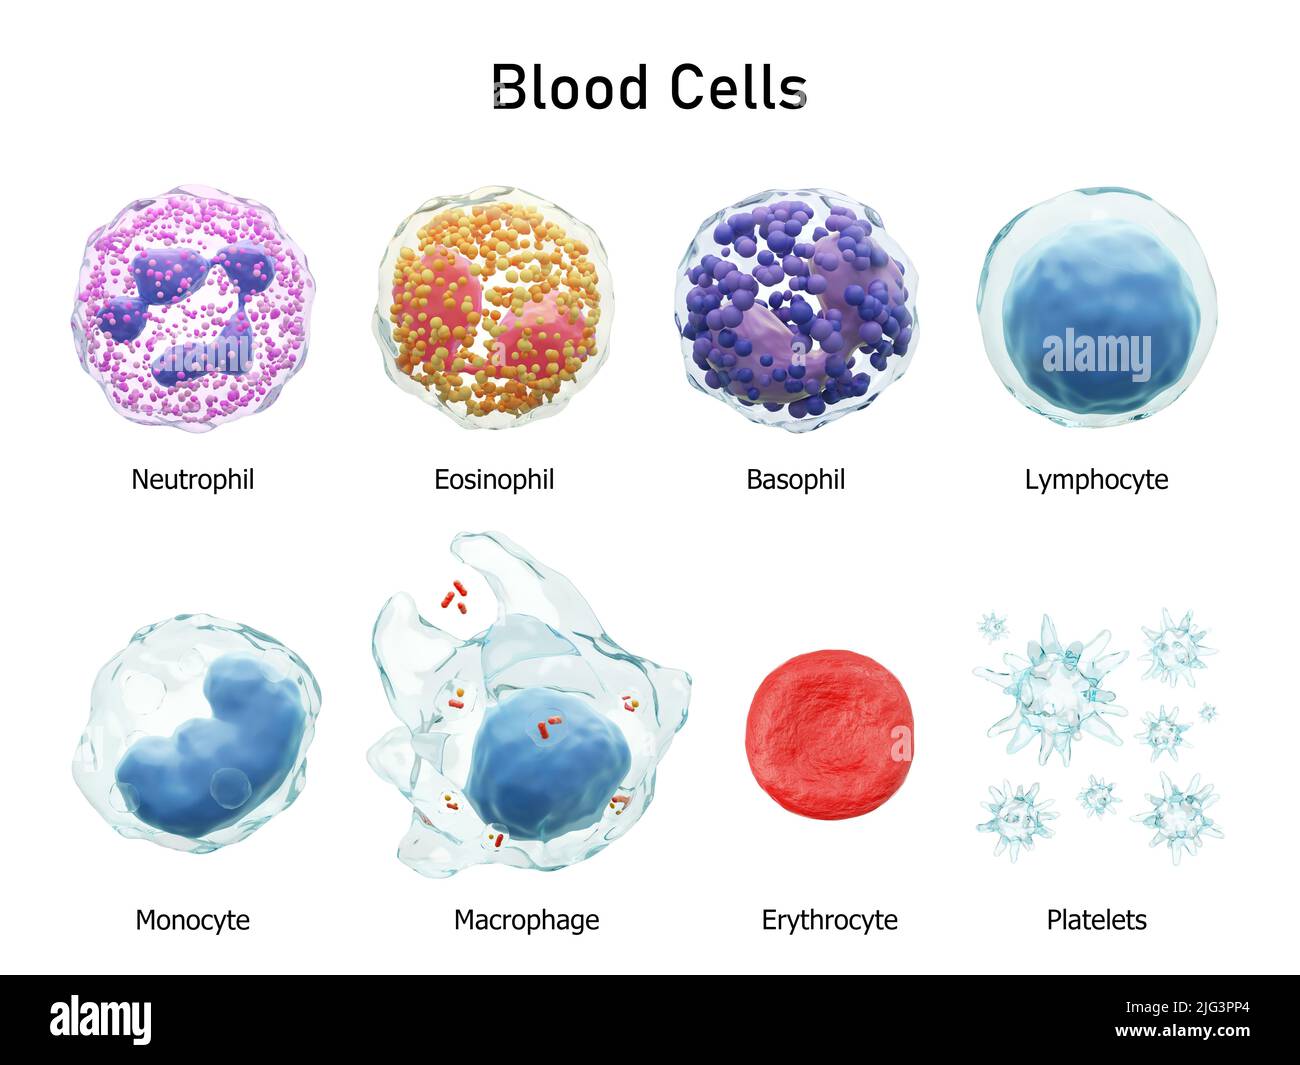 Blood cells series . Neutrophils Eosinophils Basophils Lymphocytes Monocytes Macrophages Erythrocytes and Platelets . Transparent material design . Is Stock Photo